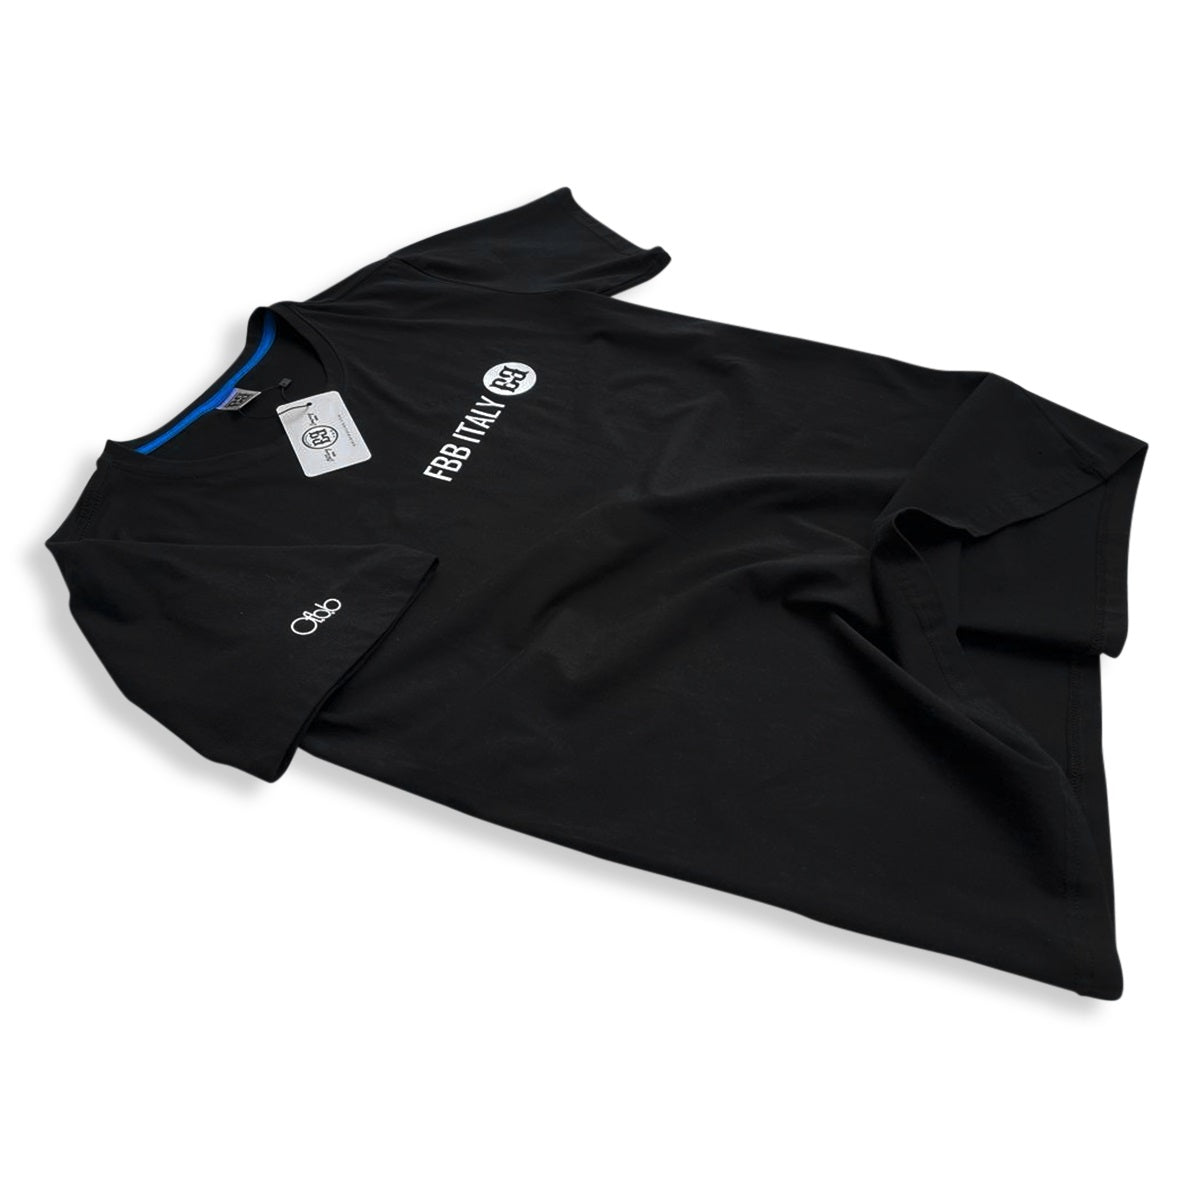 FBB ITALY Black T shirt, 3D Rubber logo